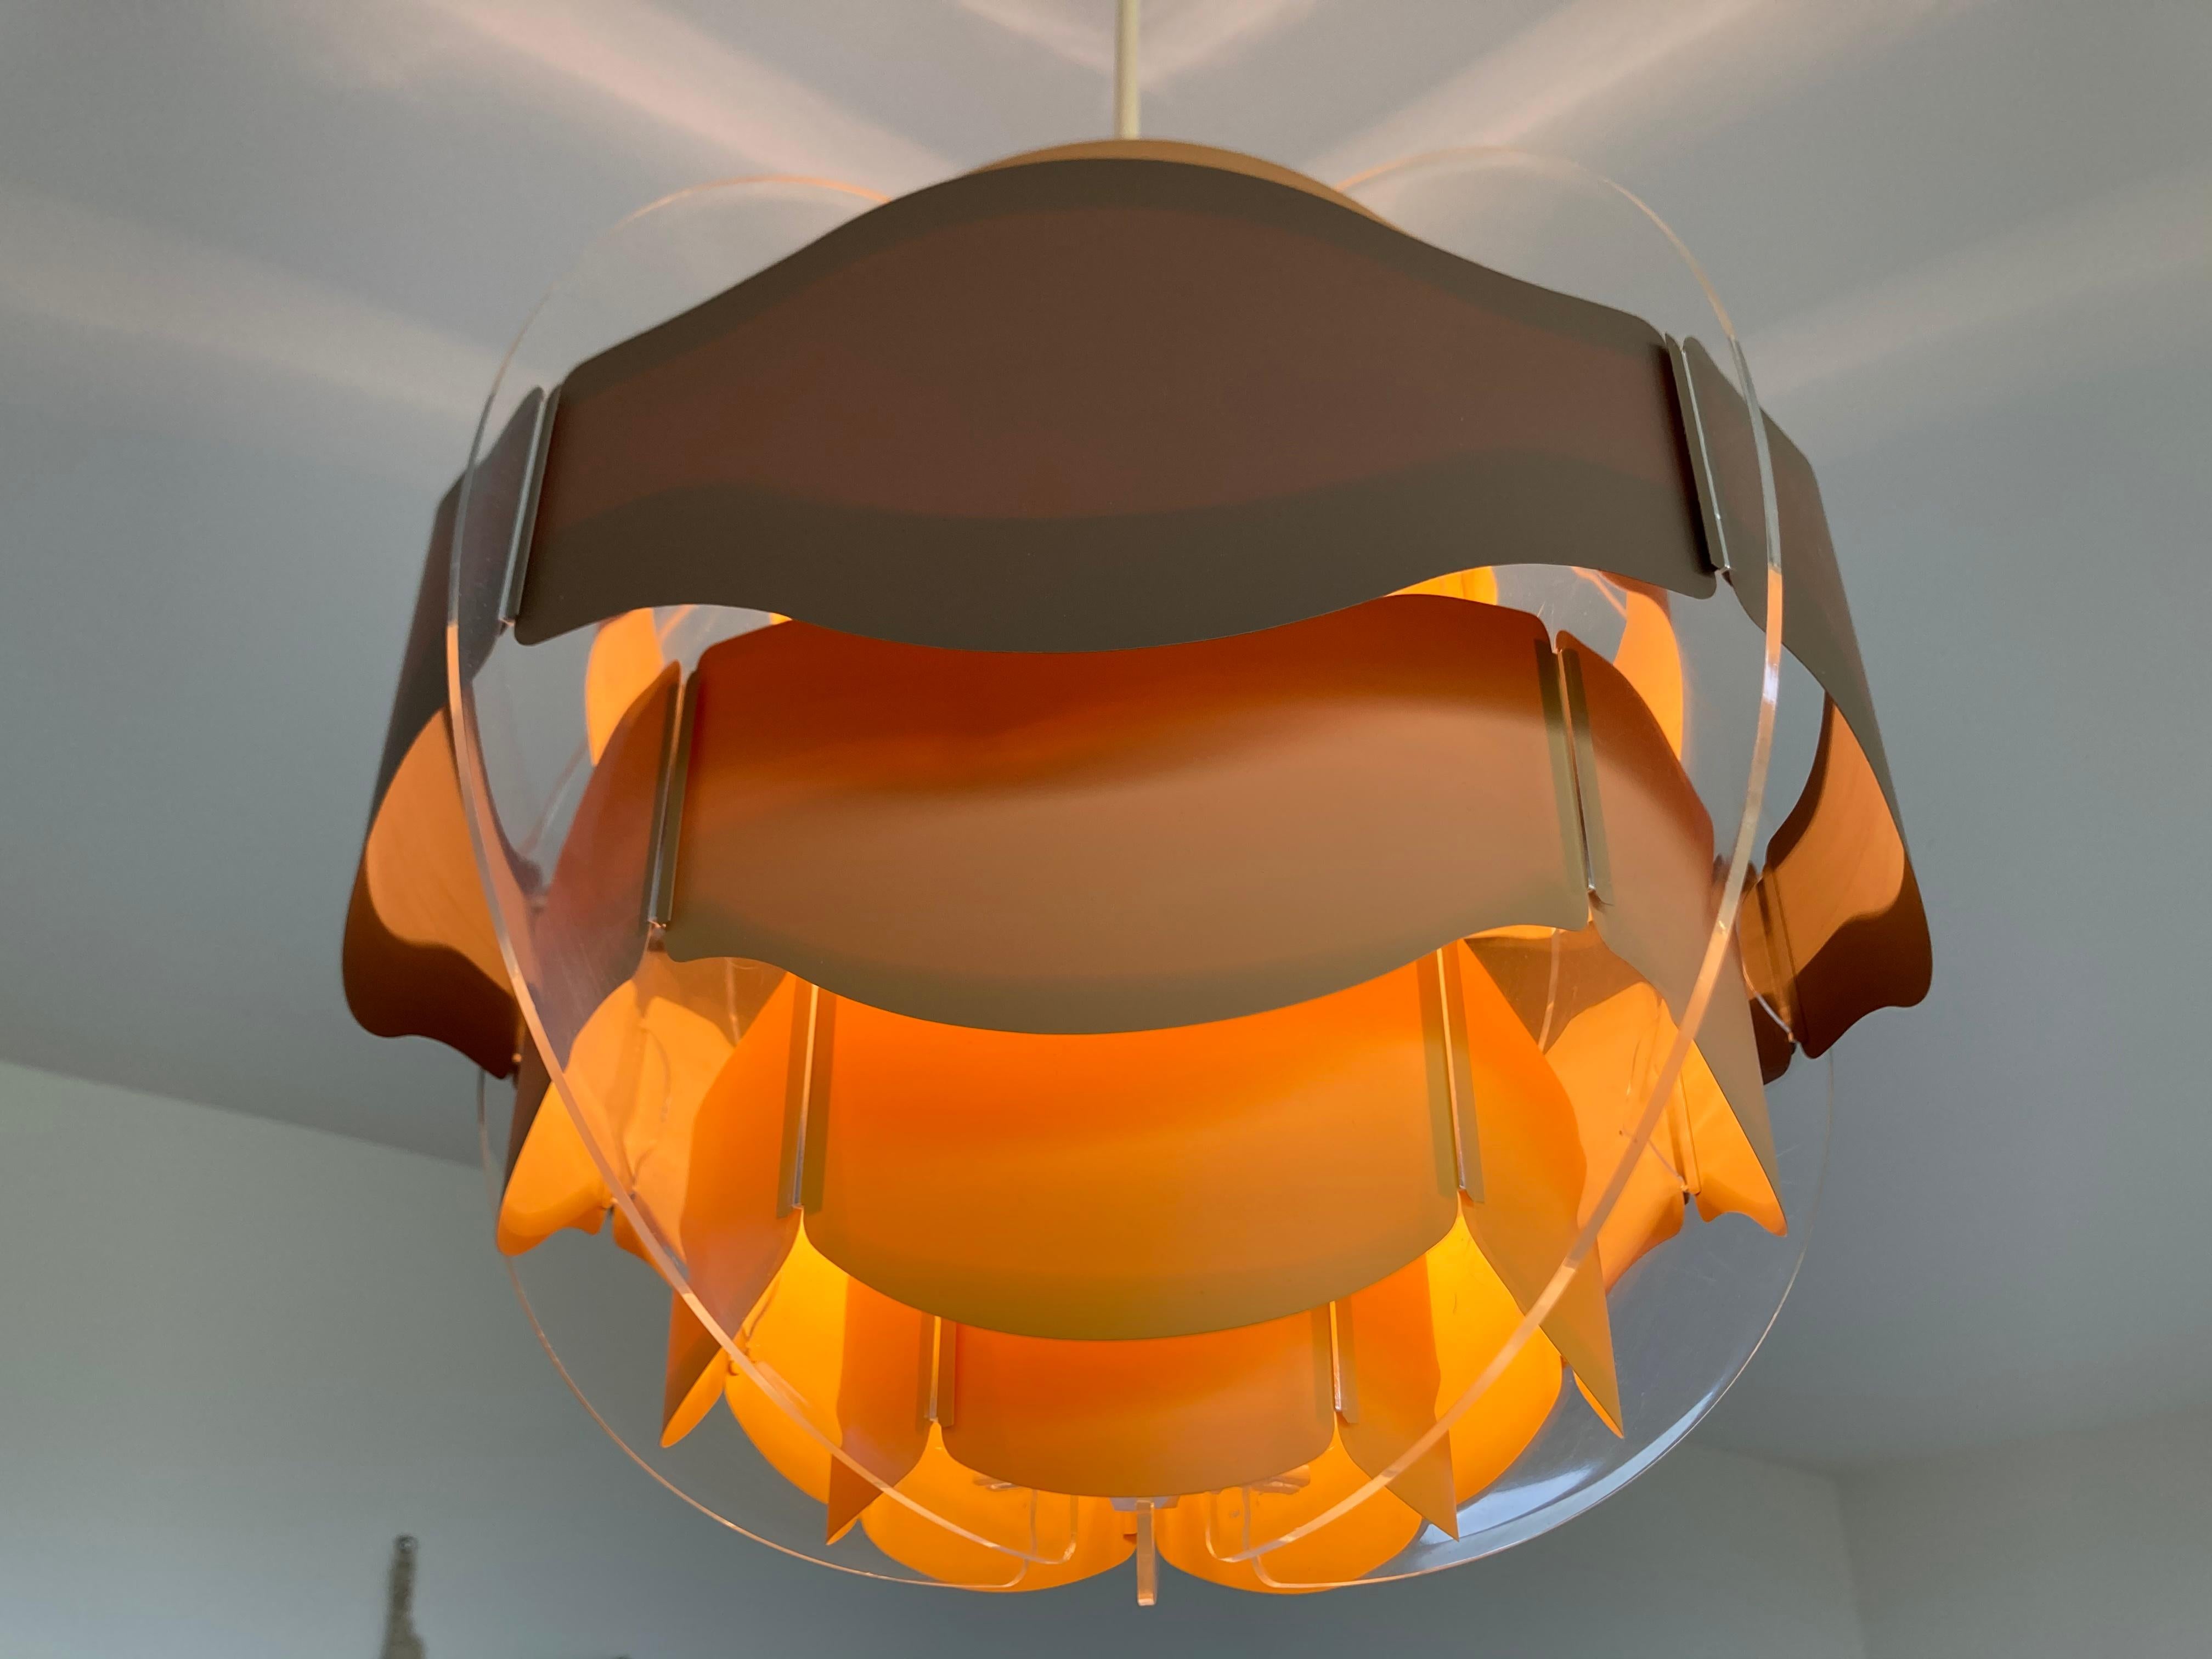 - Denmark
- Design: Flemming Brylle & Preben Jacobsen
- Made of plastic
- Perfect original condition.
 